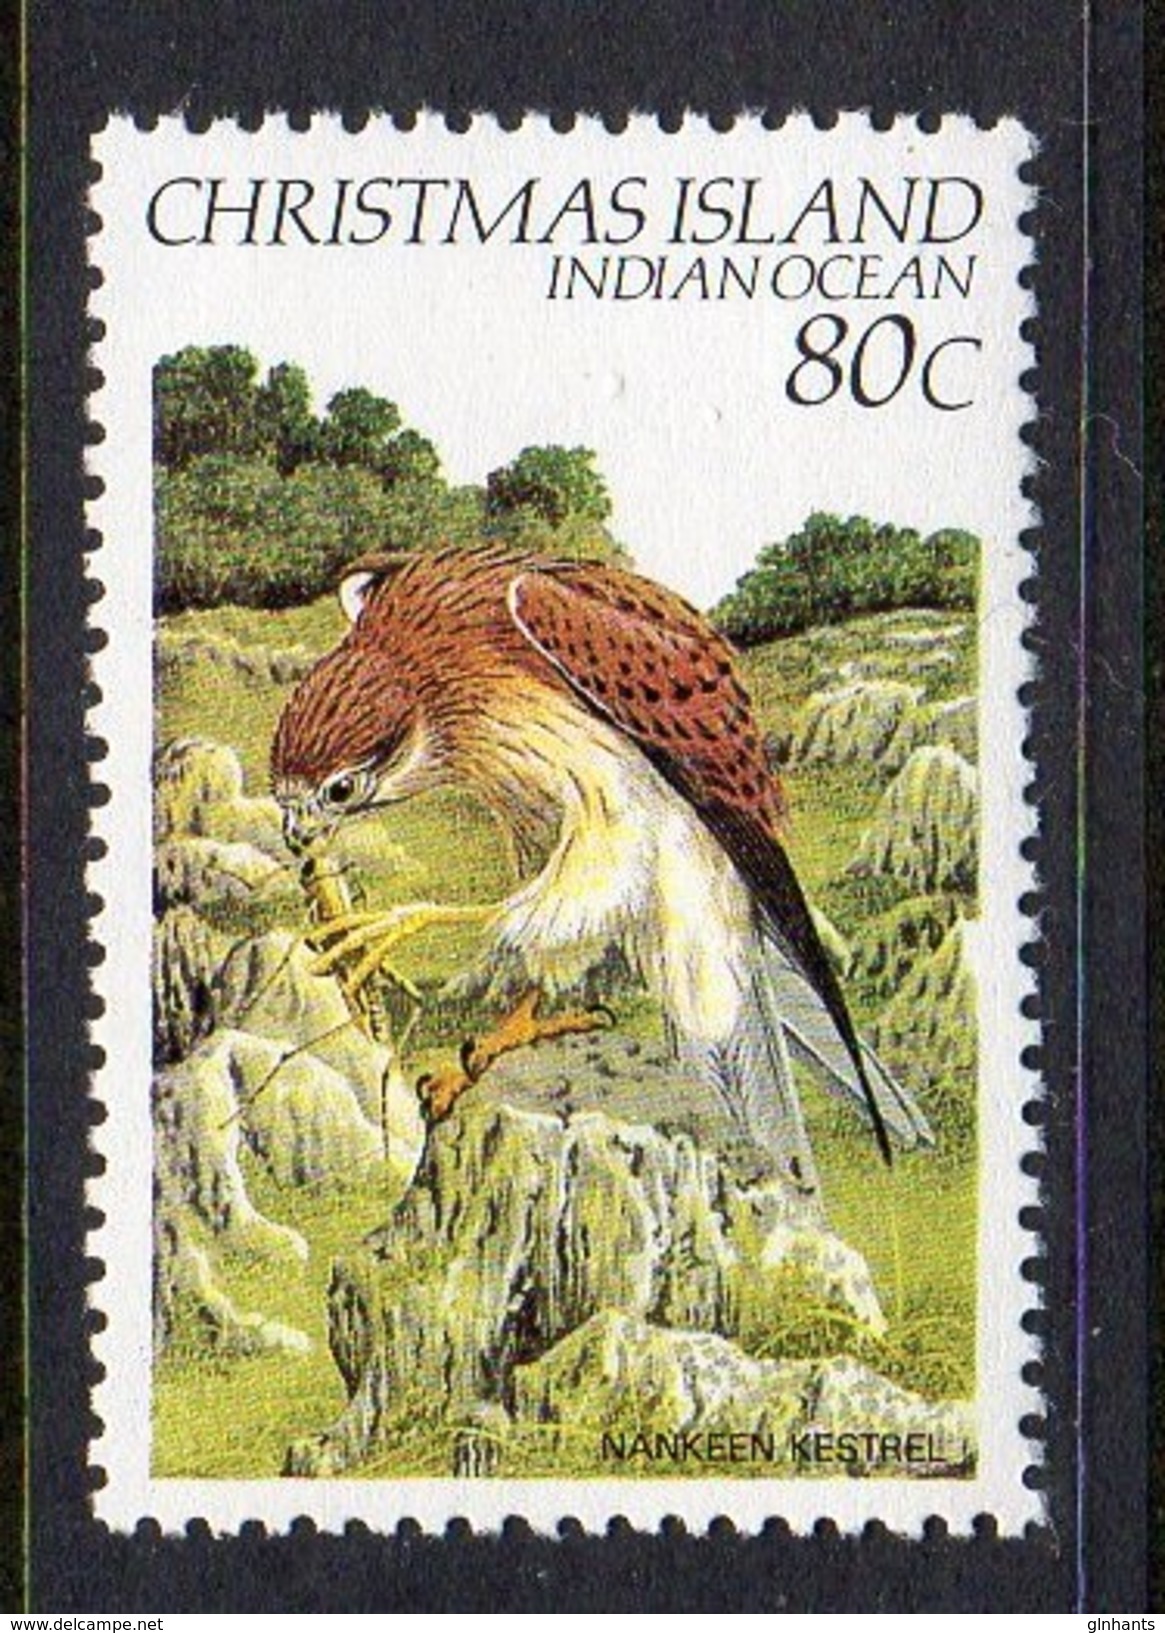 CHRISTMAS ISLAND - 1982 80c DEFINITIVE BIRD STAMP FINE MNH ** SG 164 - Christmas Island